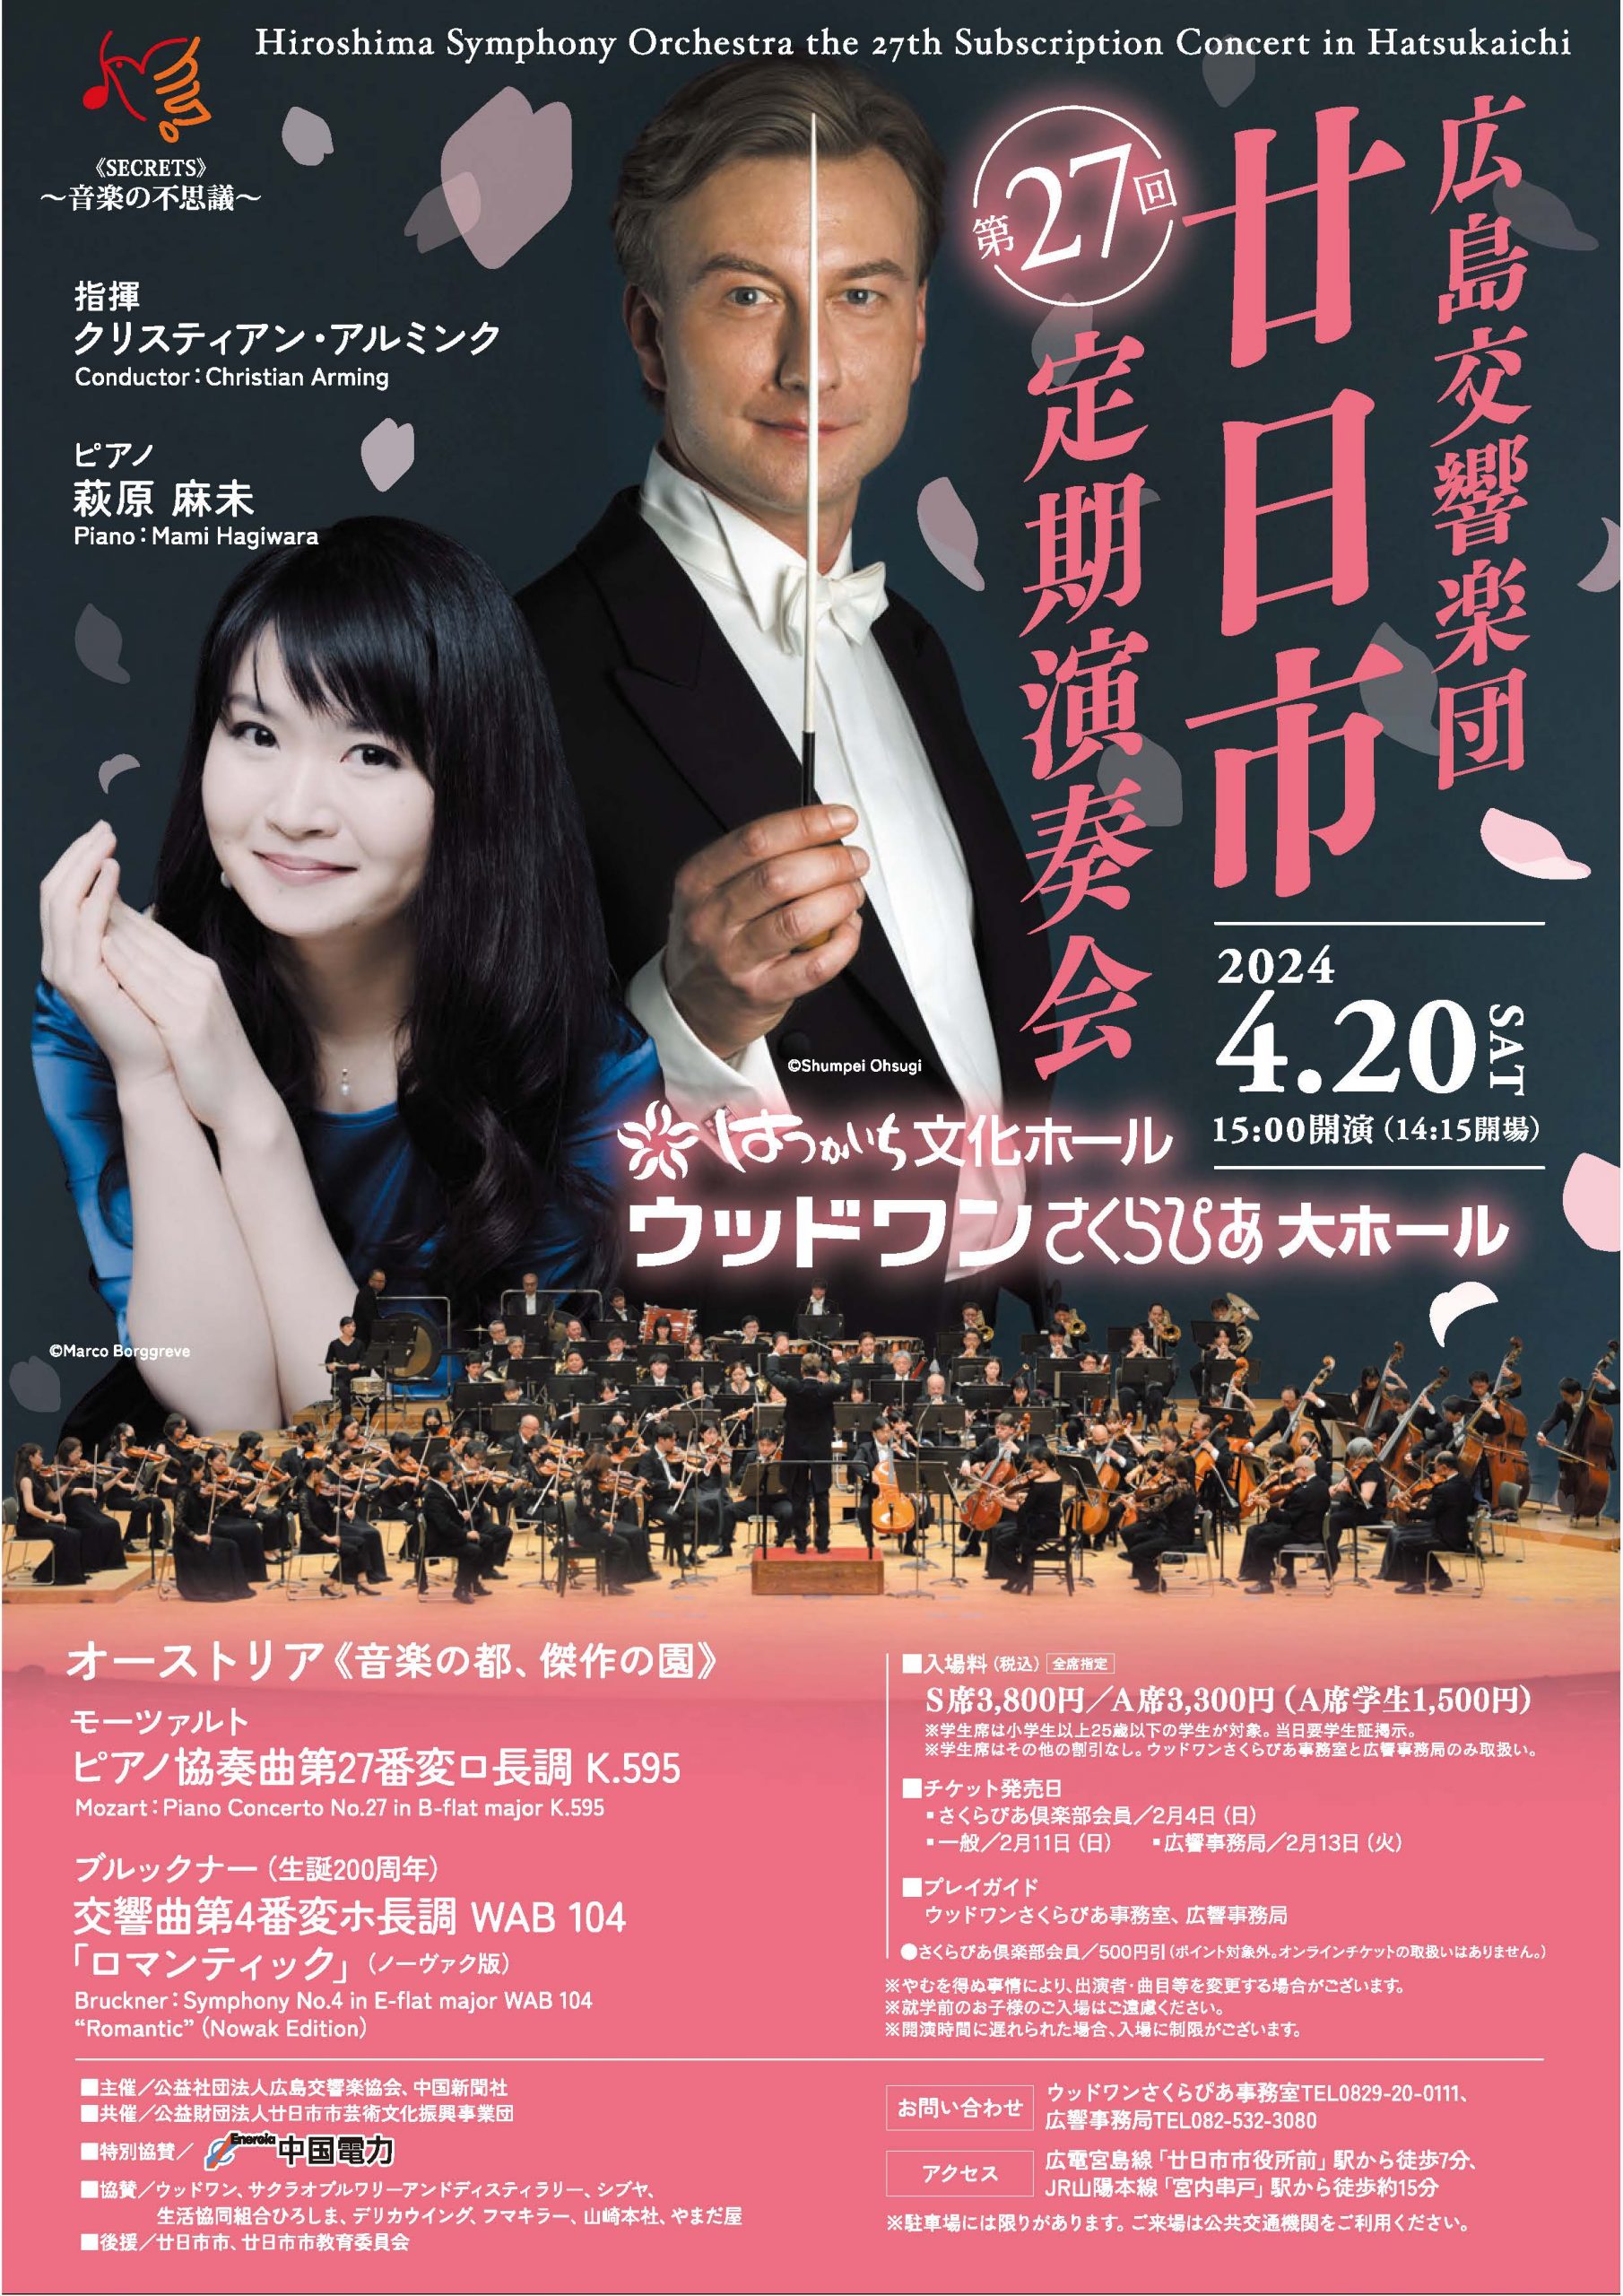 The 27th Subscription Concert in HATSUKAICHI